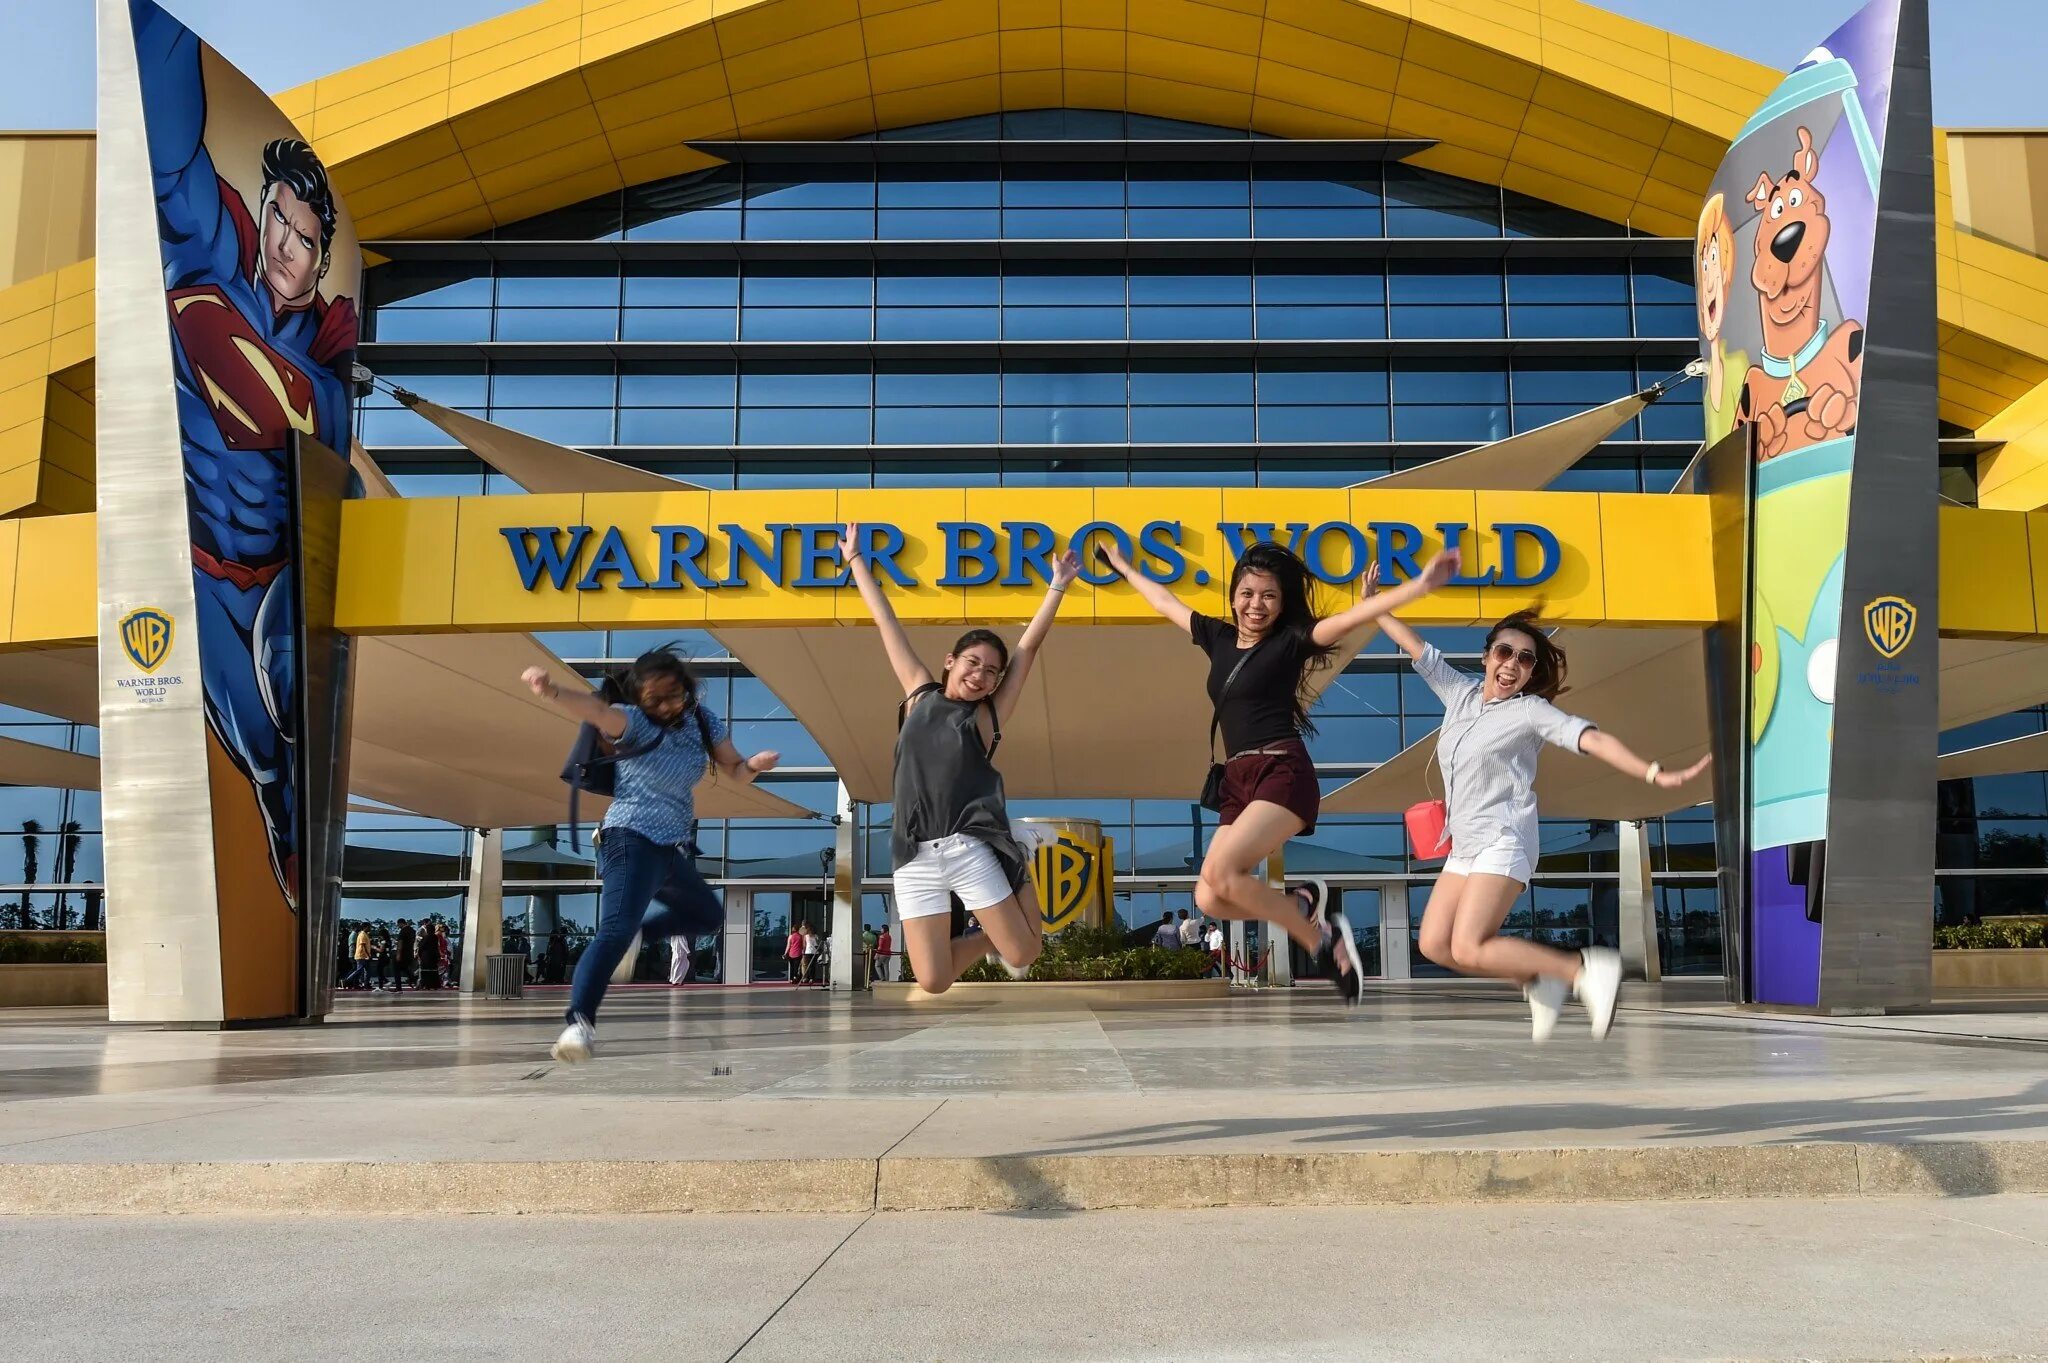 Уорнер бразерс Абу Даби. Ворнер БРОС парк Абу. Warner Bros World парк развлечений в Абу-Даби. Парк ворнер Браз в Абу Даби.